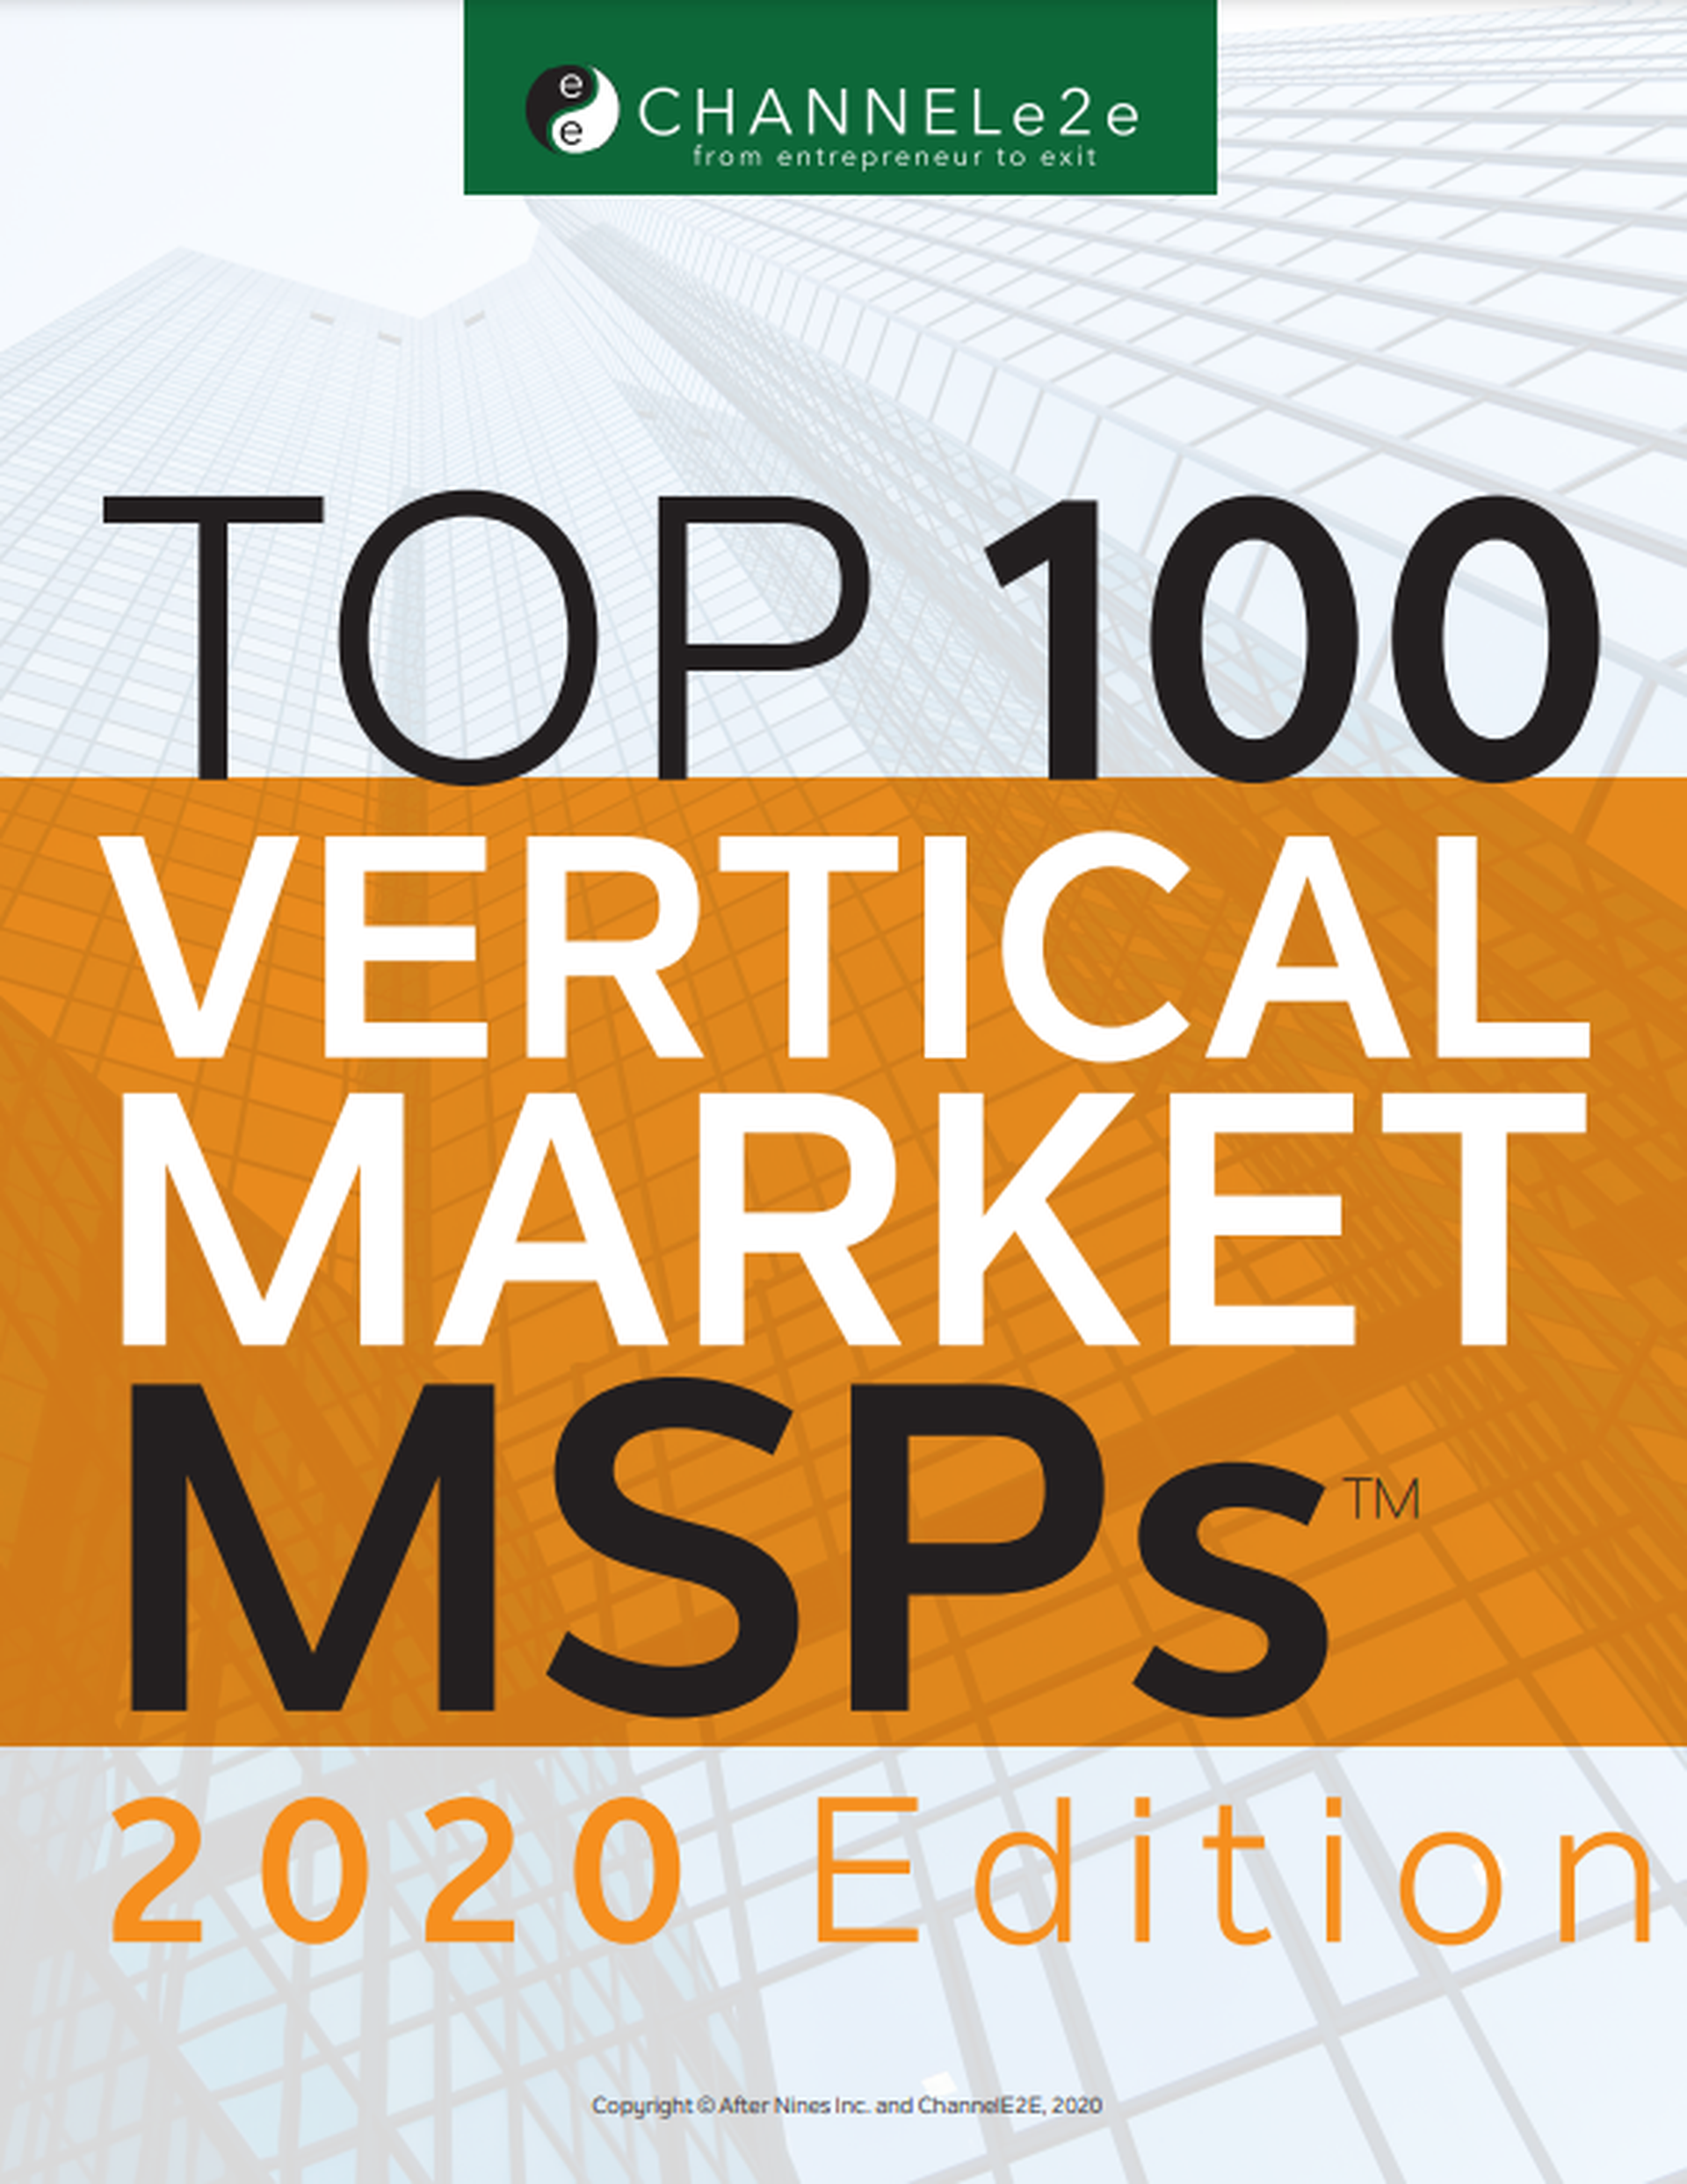 Top 100 Vertical Market MSPs 2020 Edition